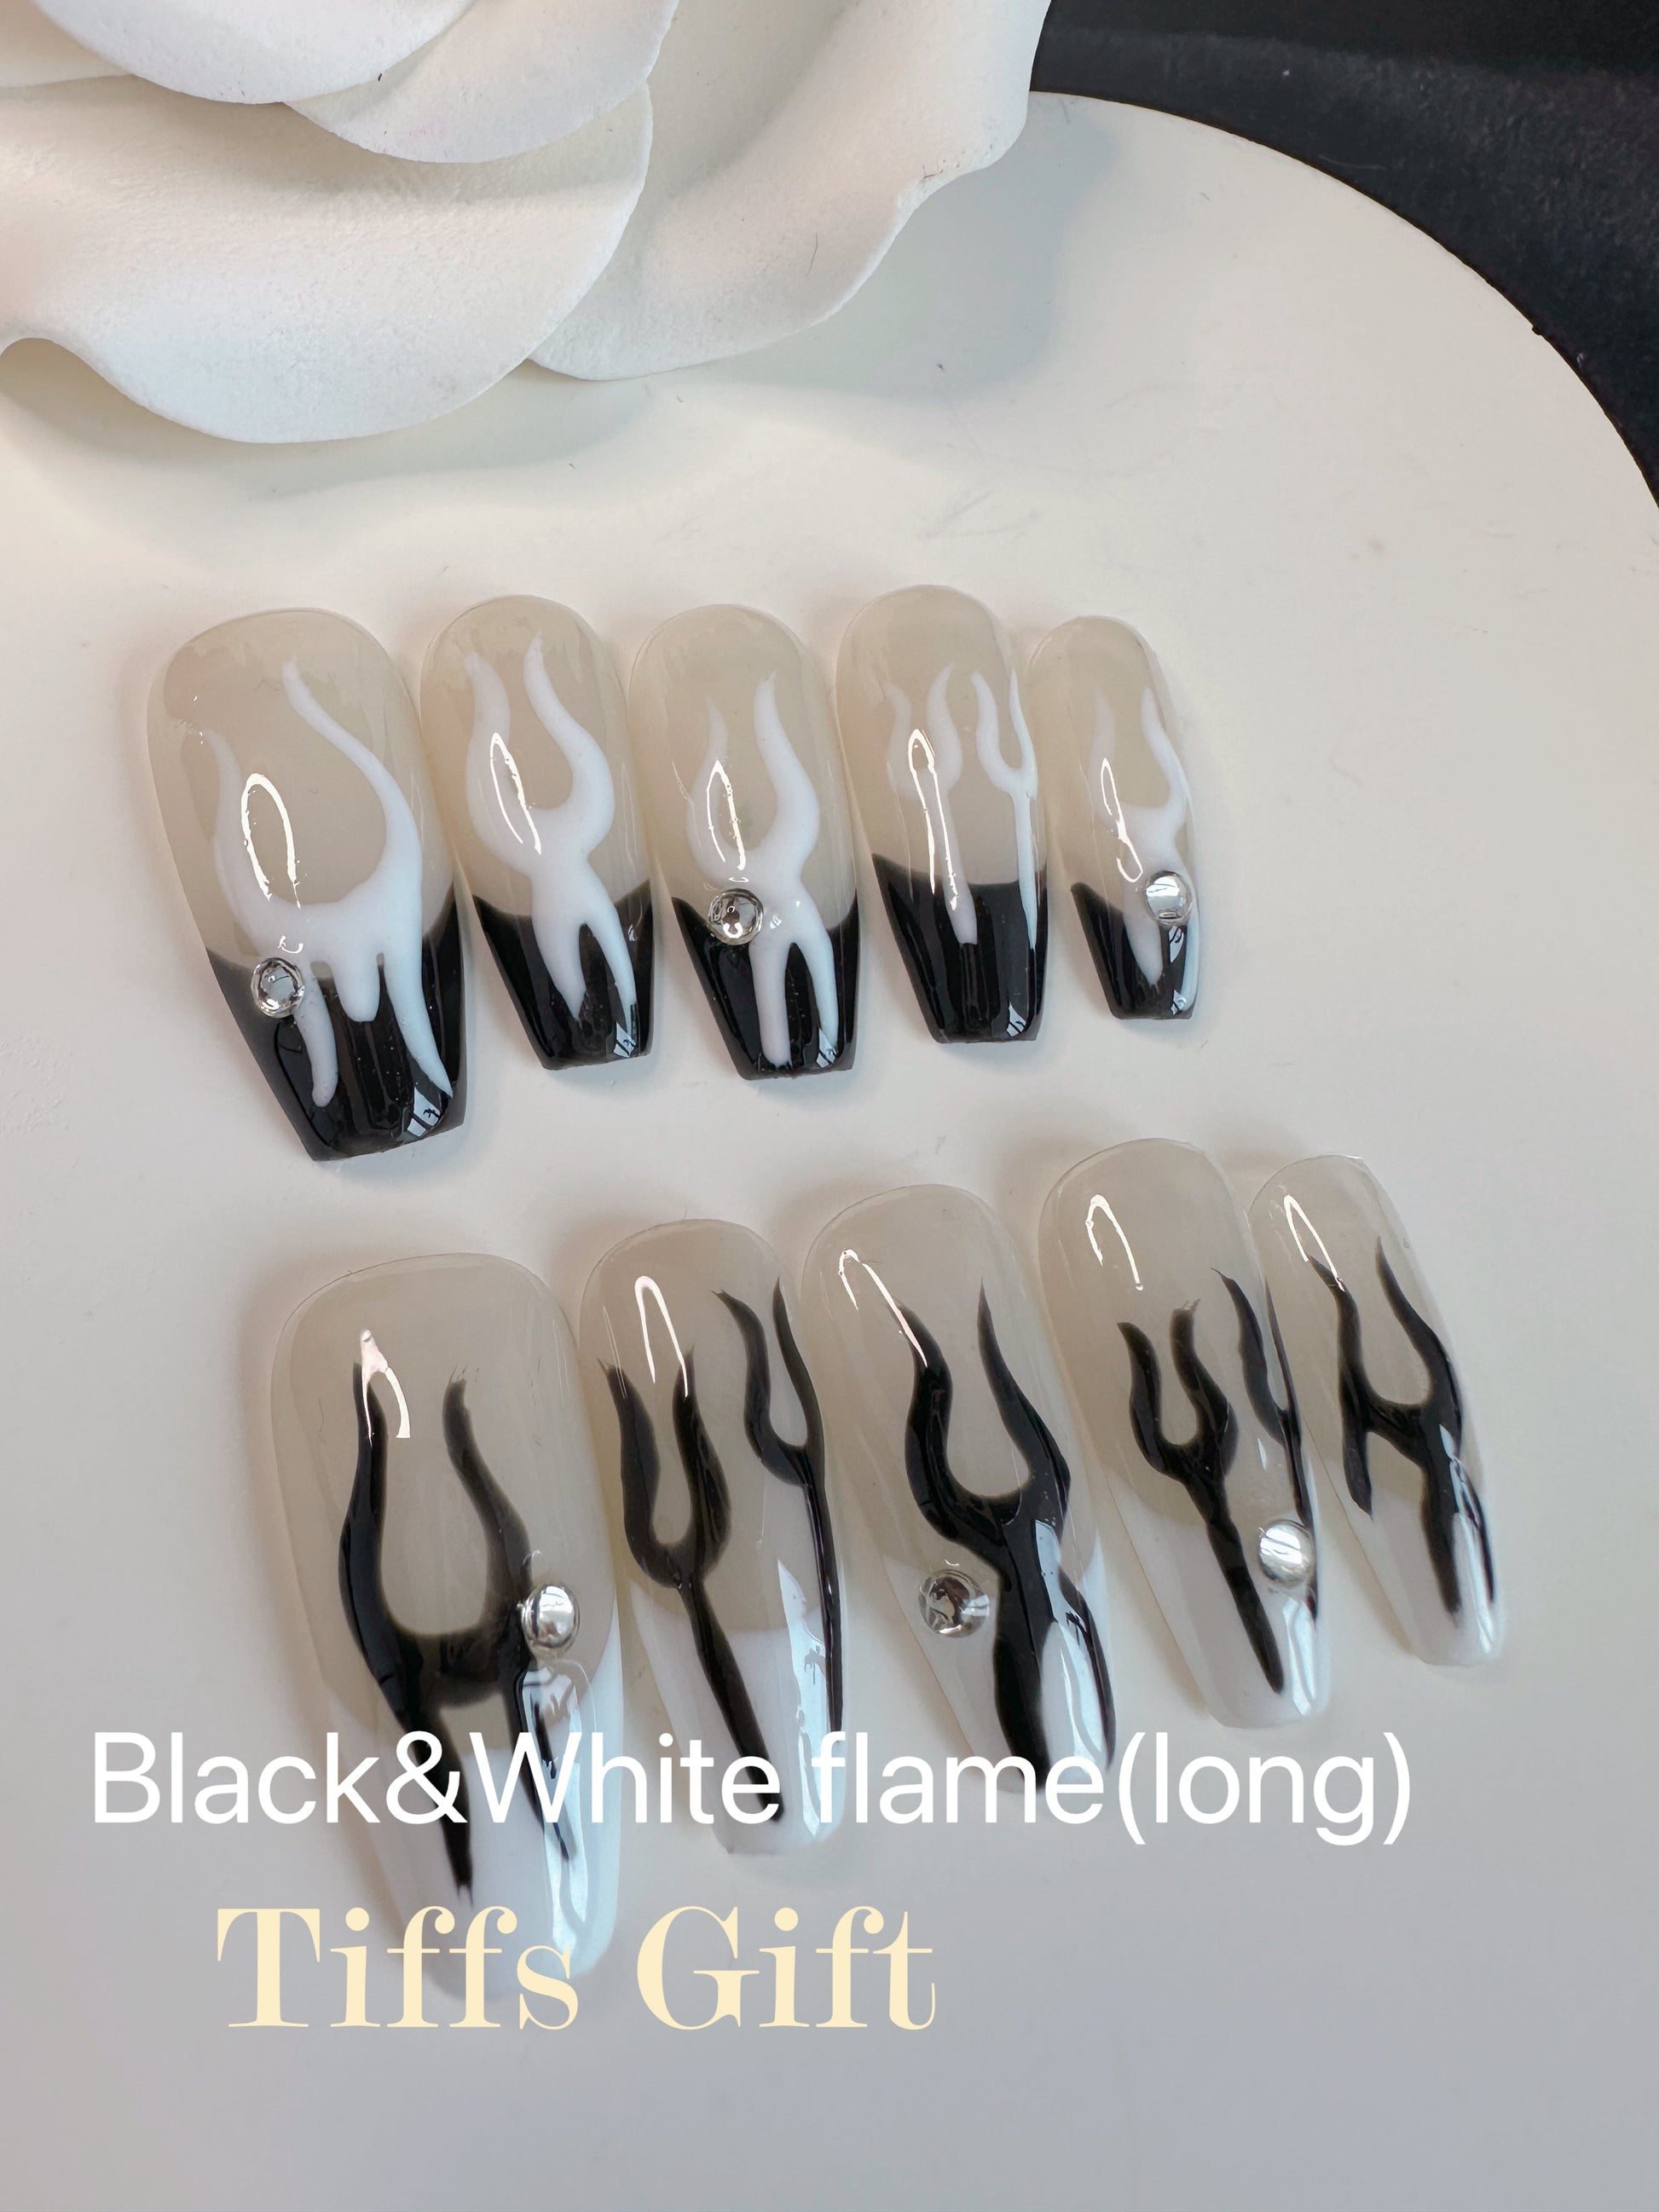 Black white flame (long) Reusable HandMade Press On Nails - TiffsGift